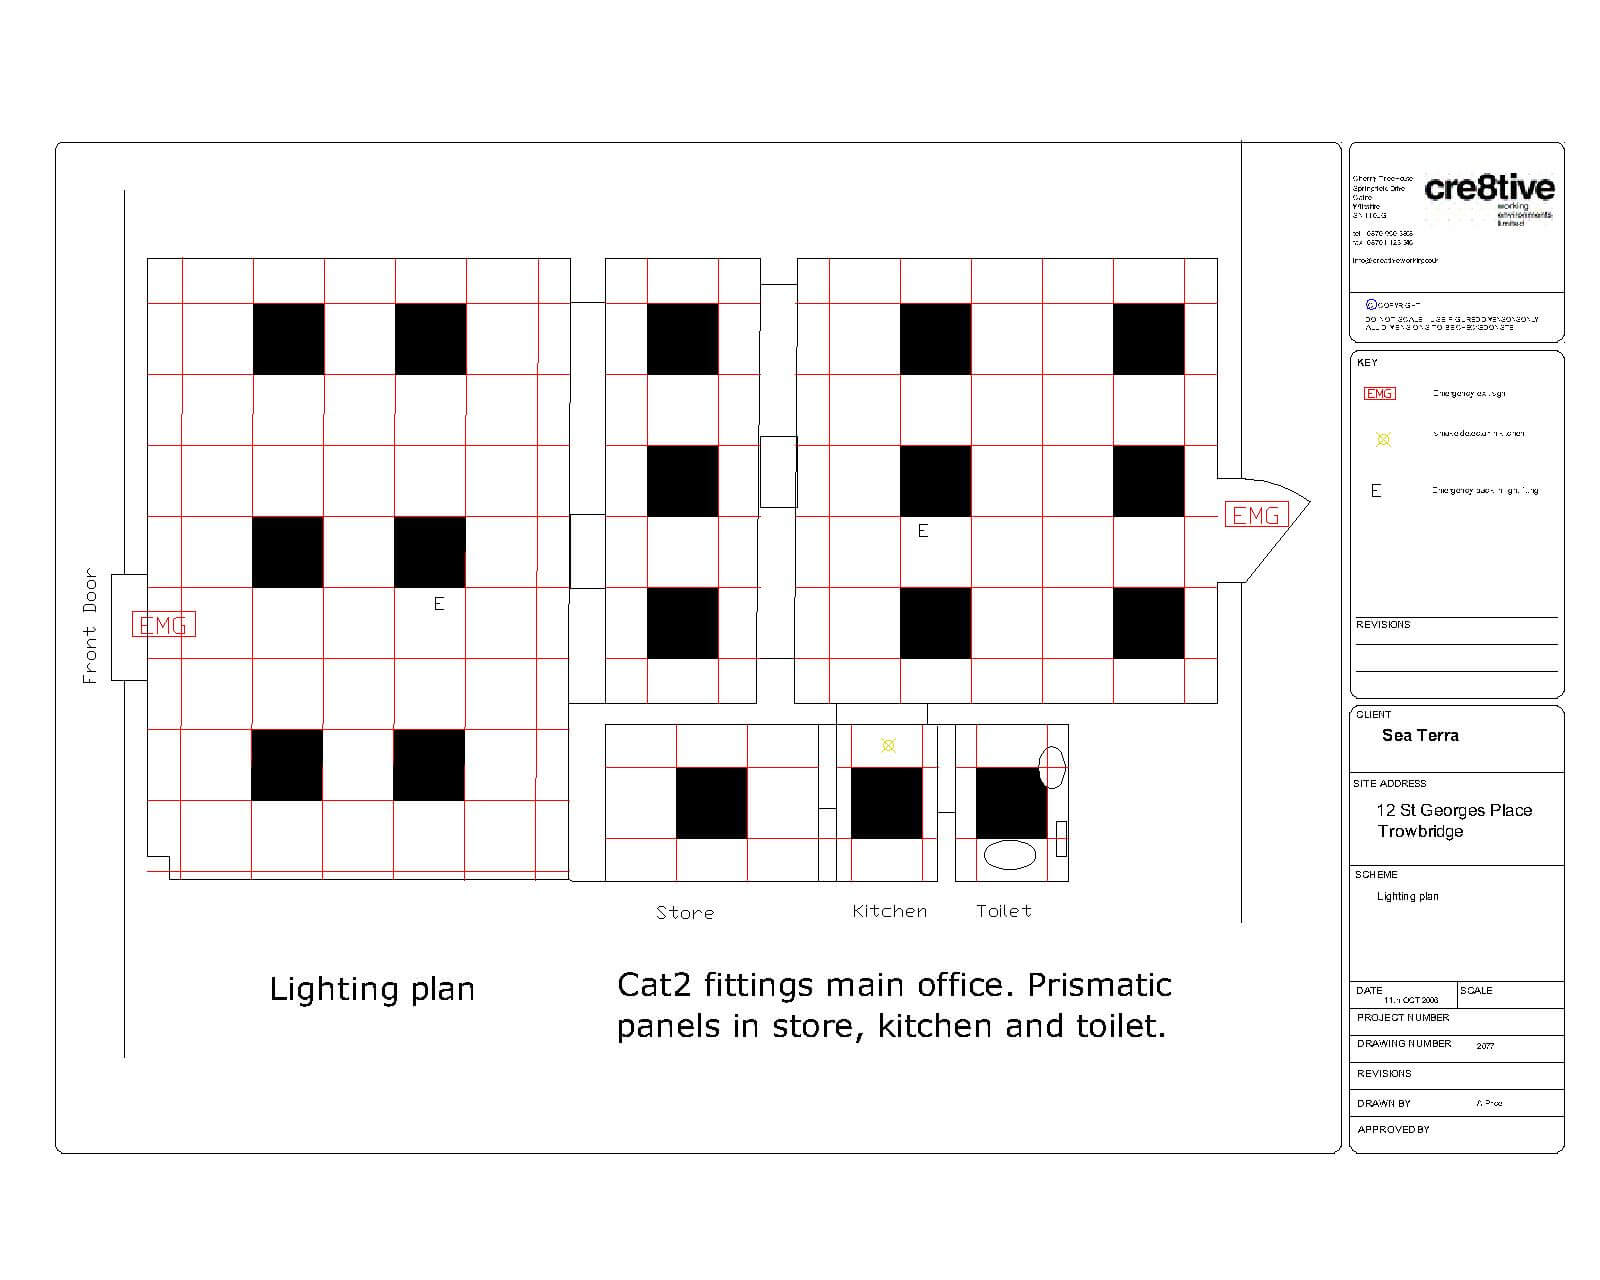 Design new lighting layout